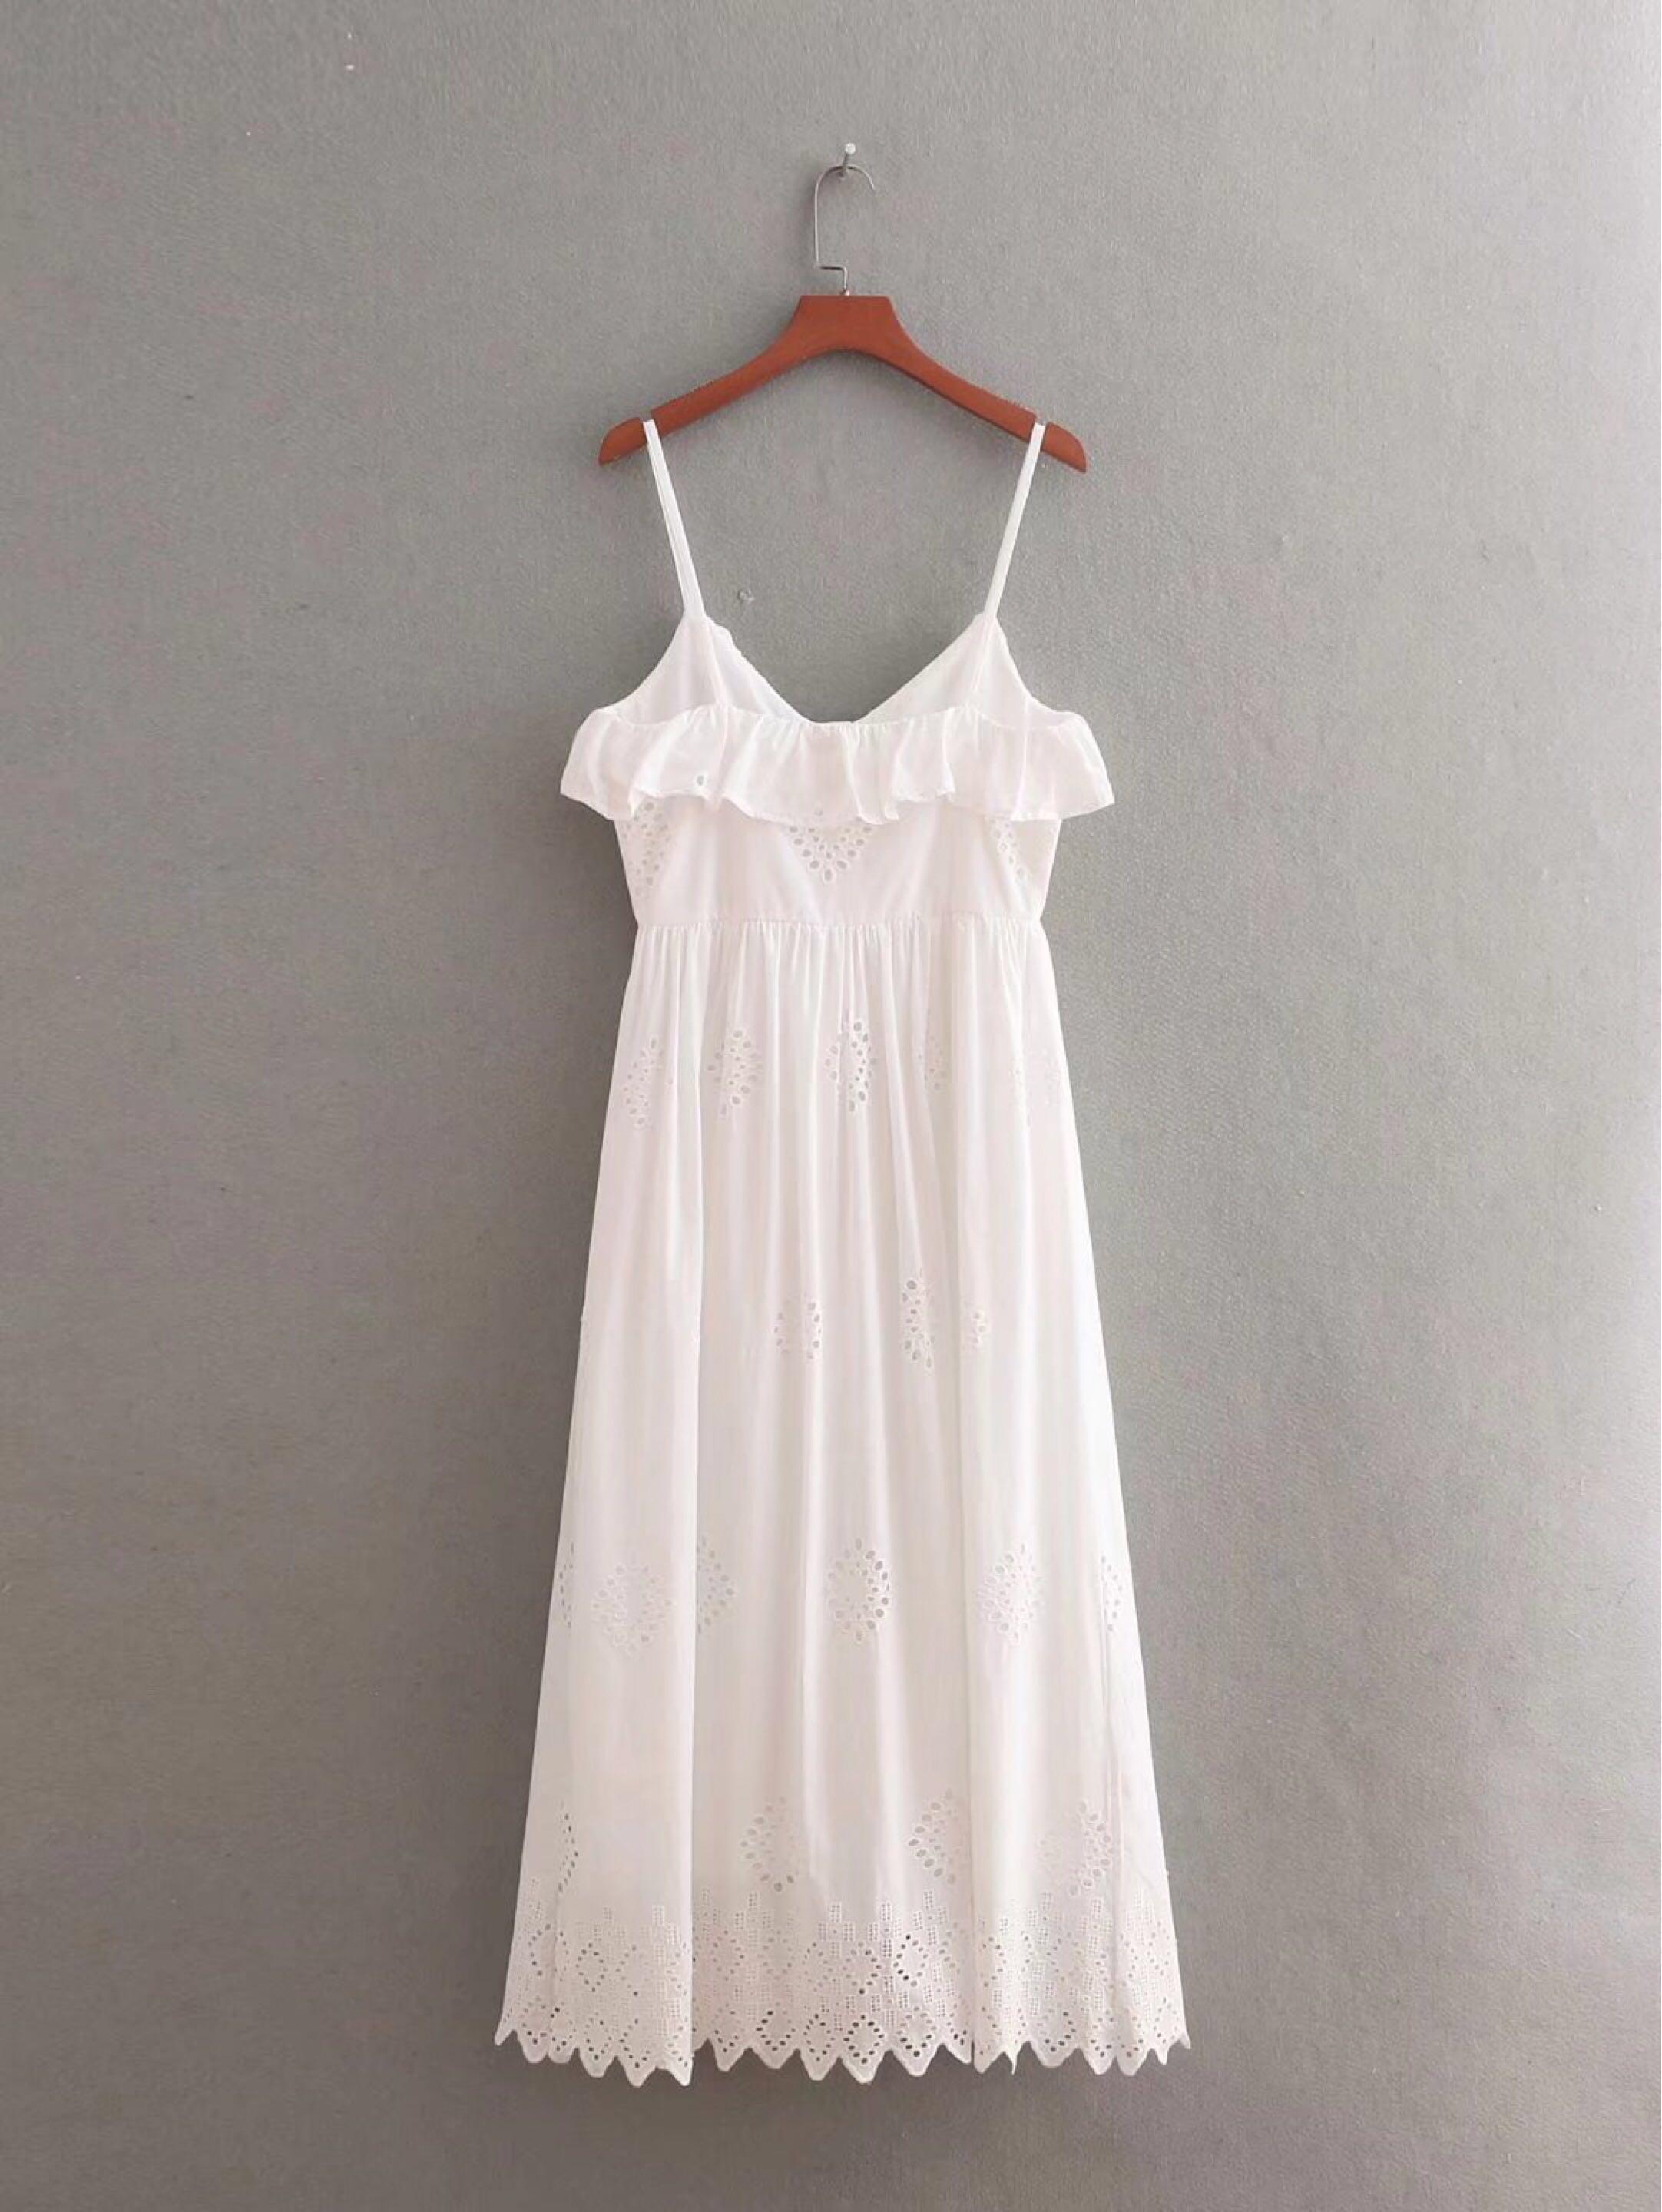 white maxi dress zara